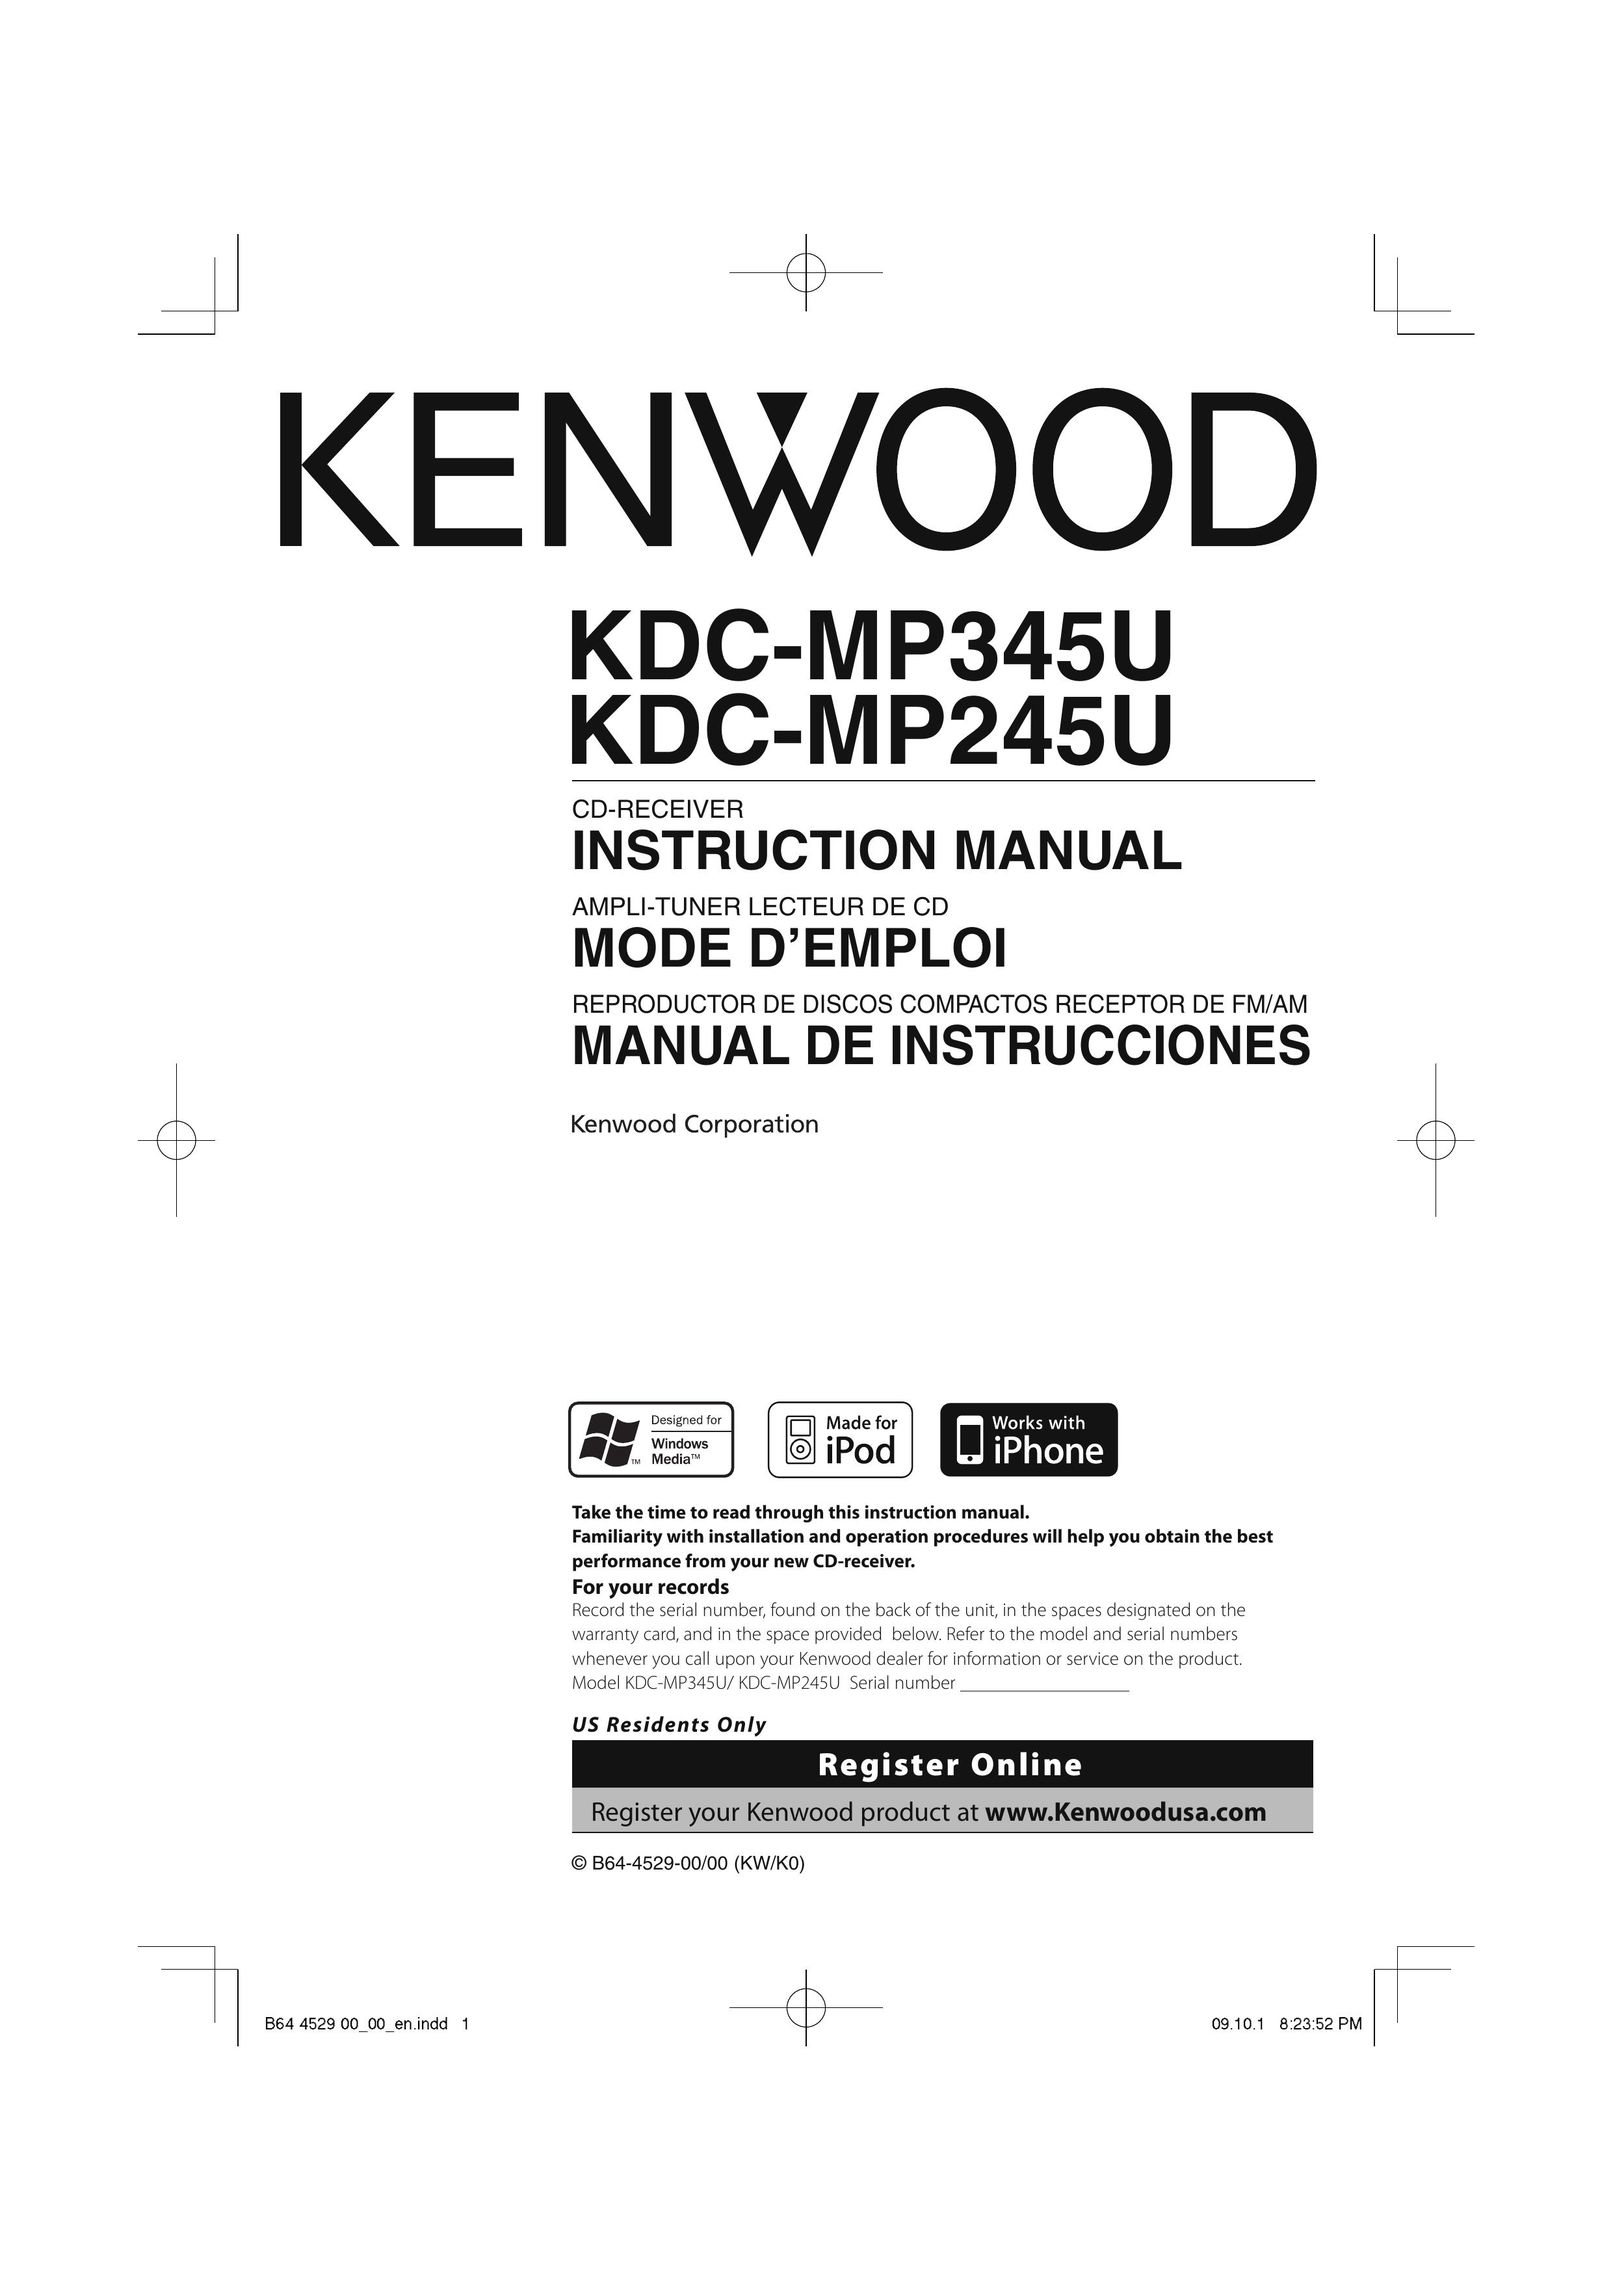 Kenwood KDC-MP345U Car Speaker User Manual